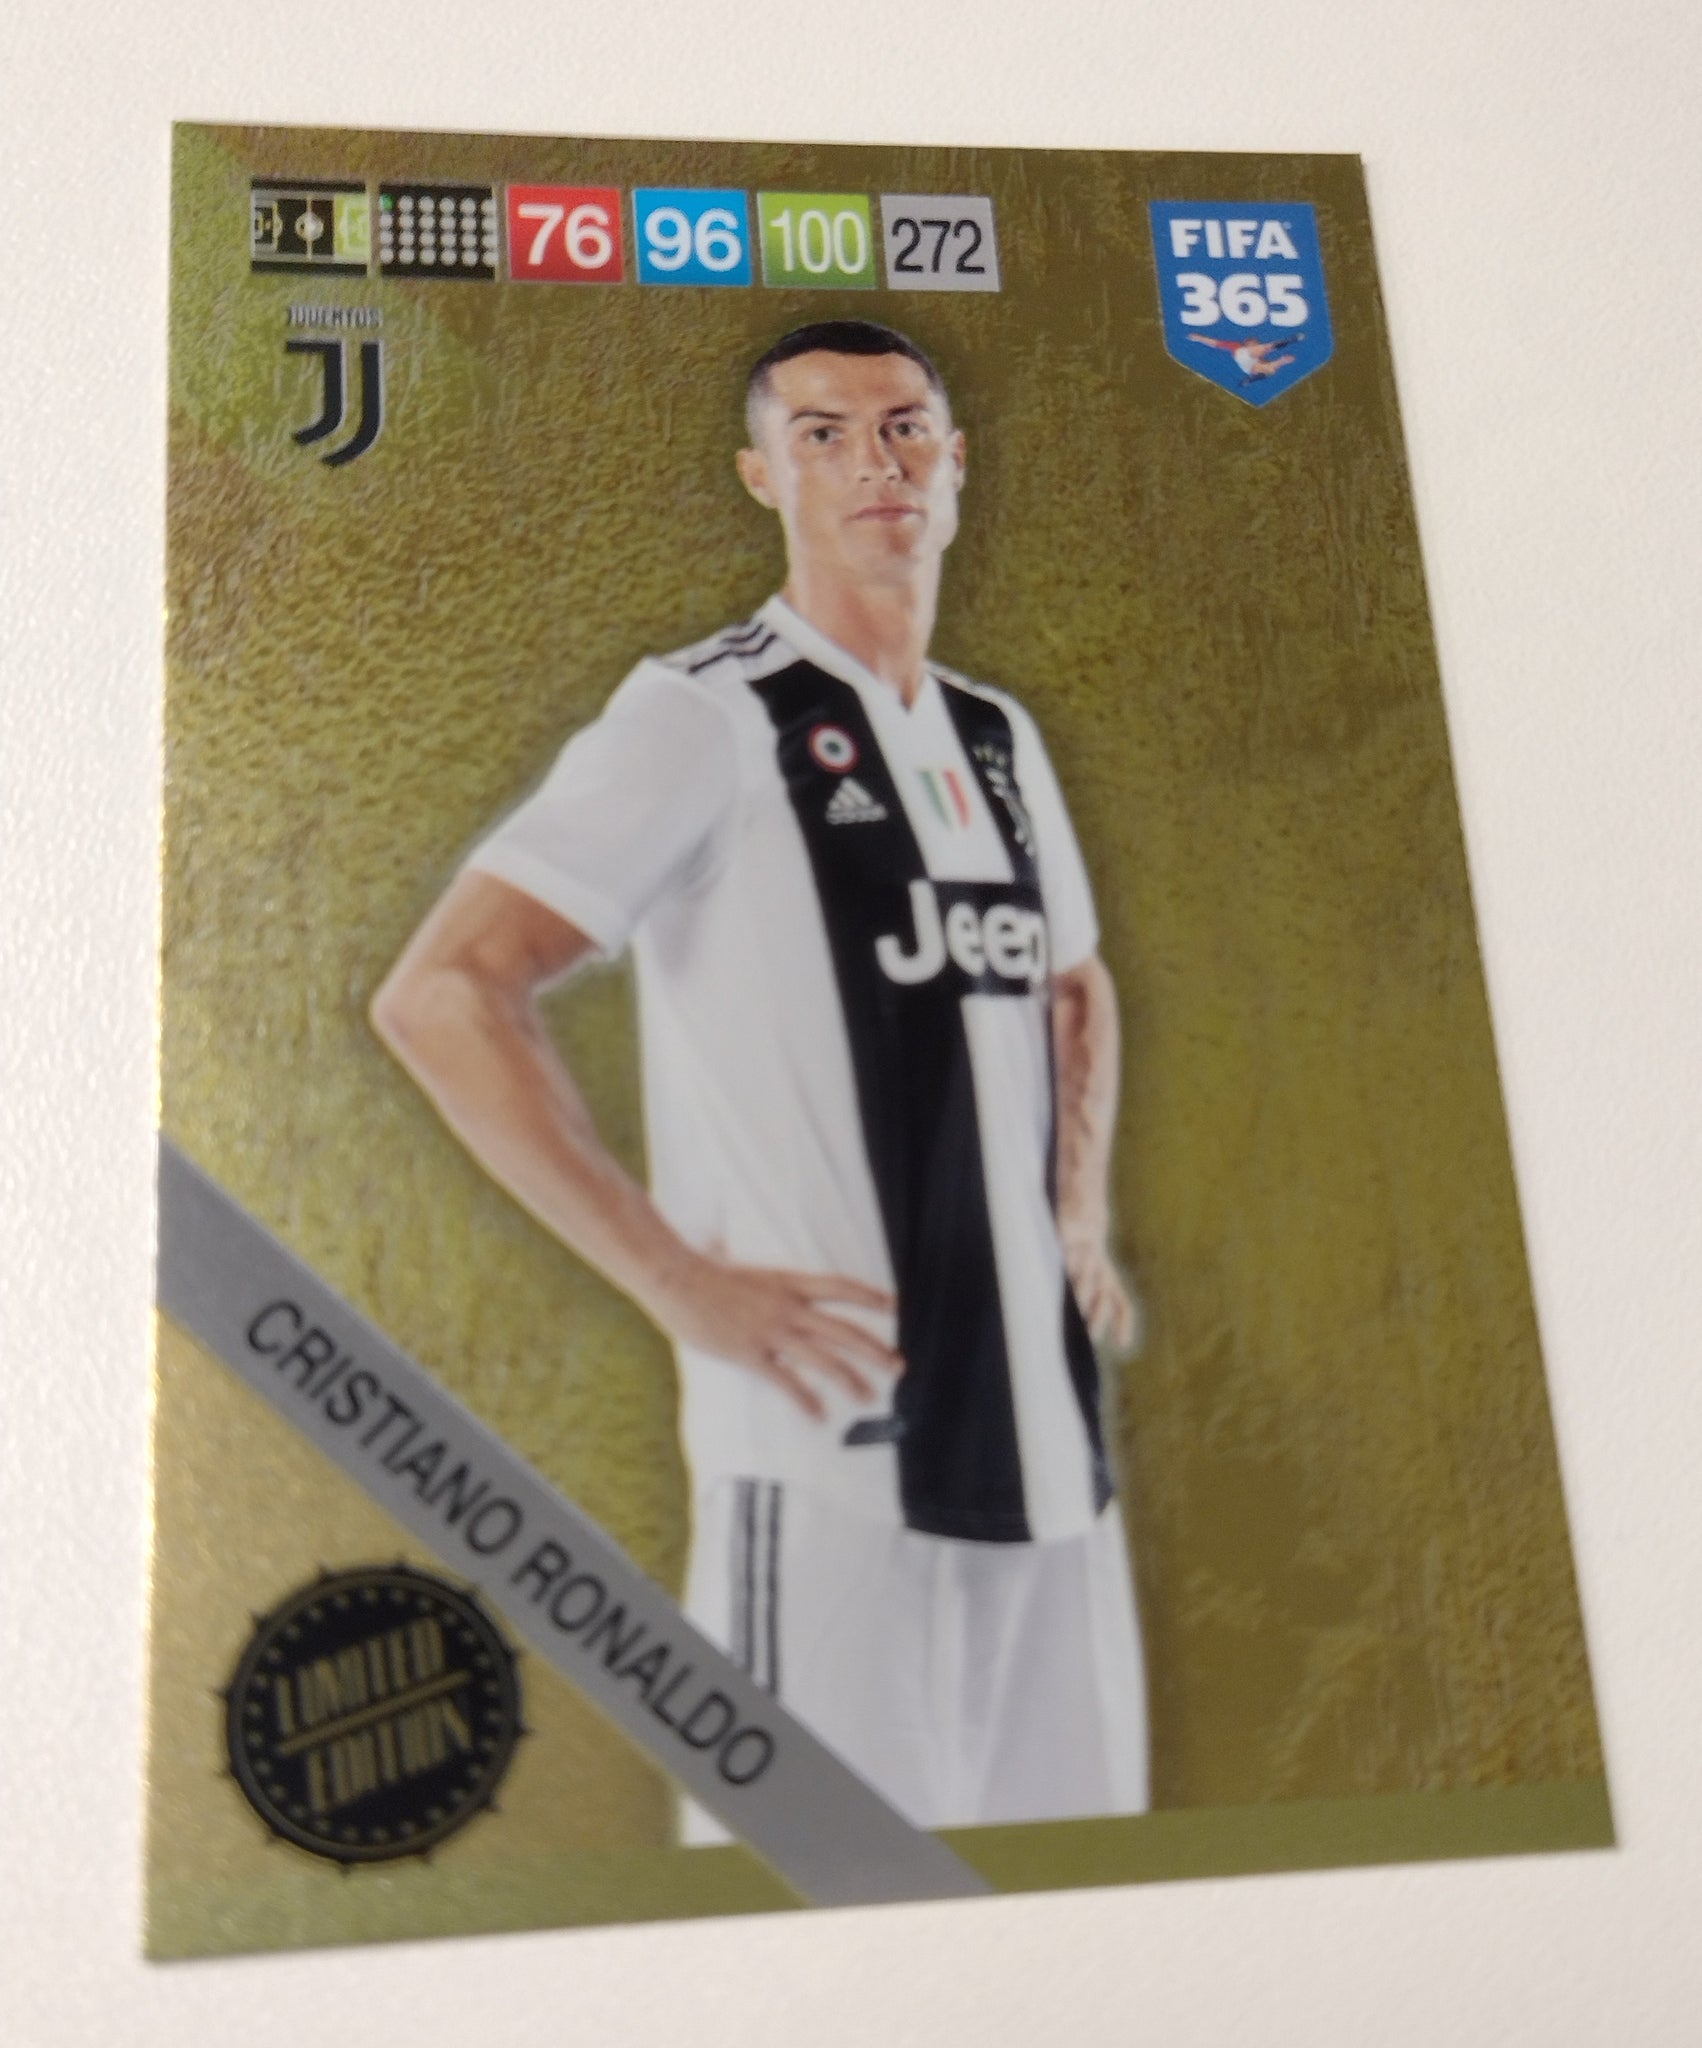 2018 Panini Adrenalyn FIFA 365 Cristiano Ronaldo Limited Edition Trading Card